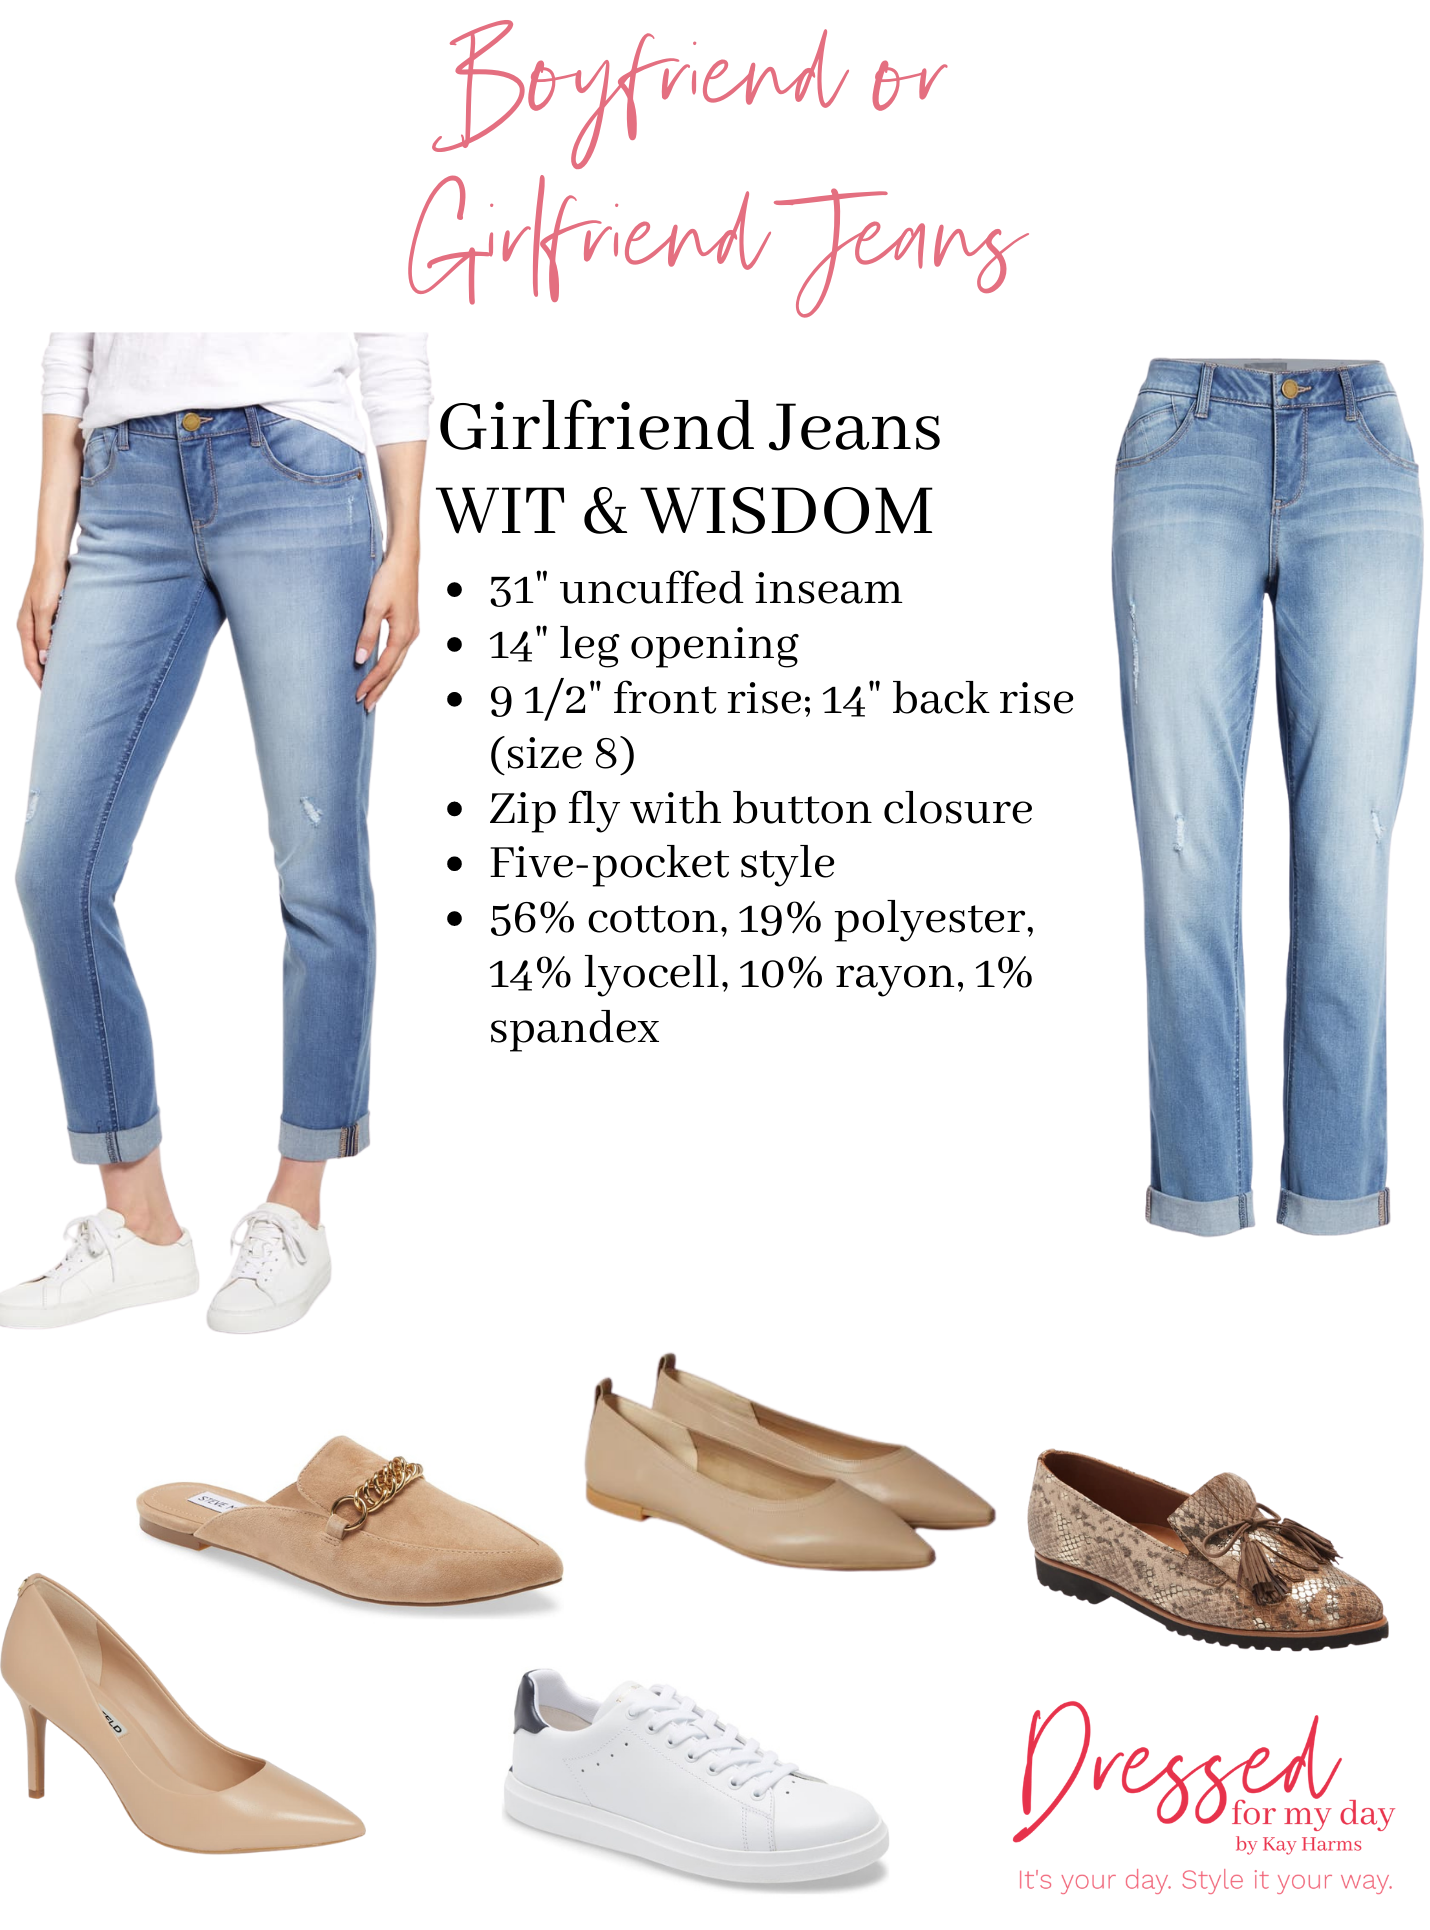 Shoes to Wear with Girlfriend or Boyfriend Jeans